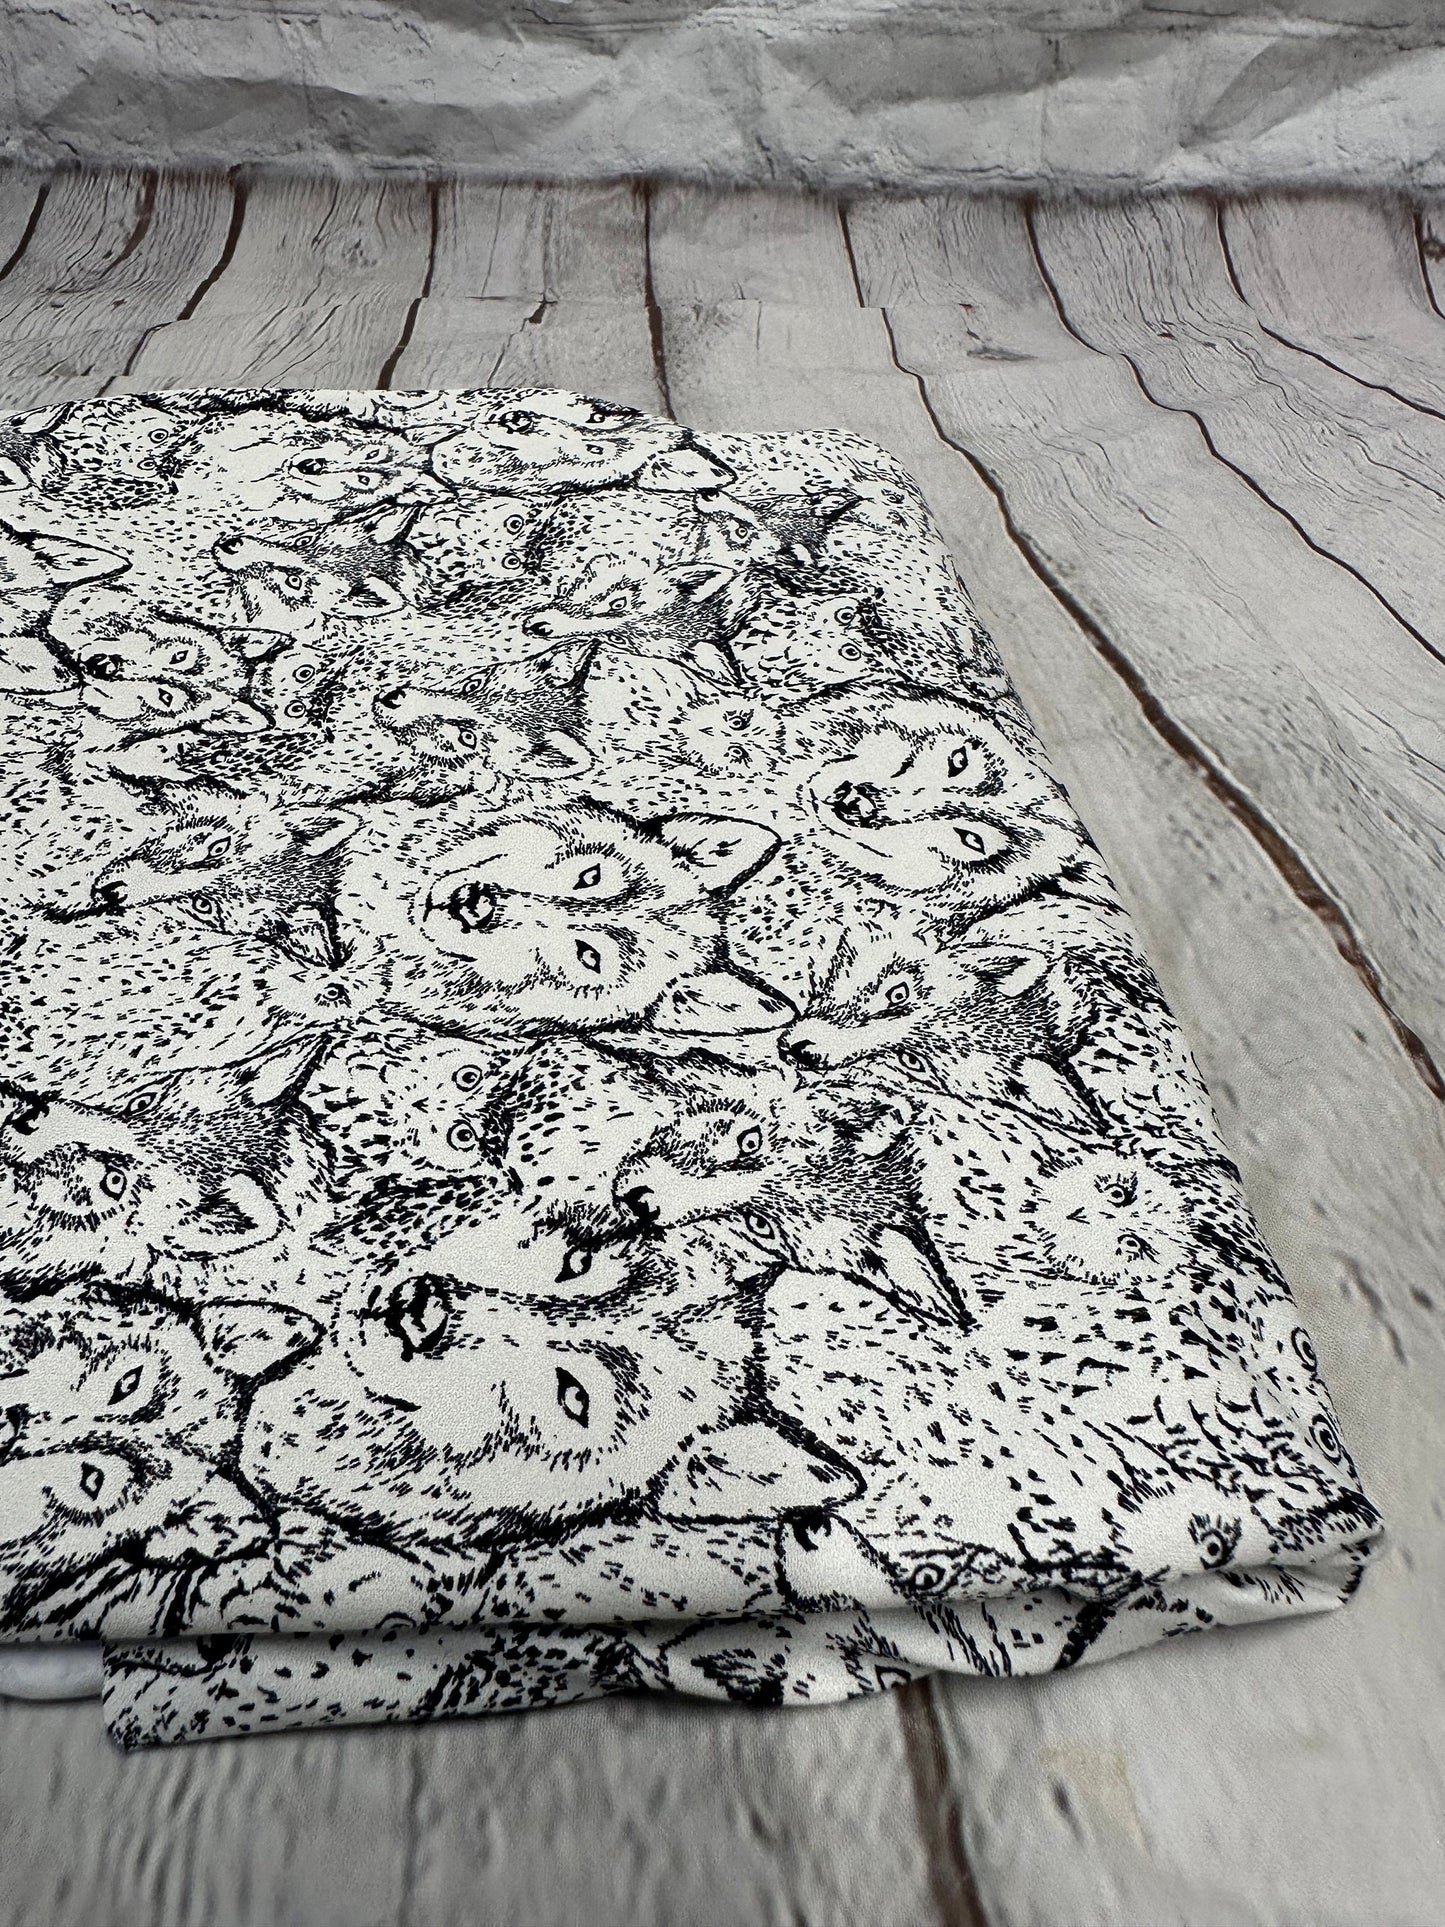 4 Way Stretch Assorted Print Nylon Spandex Fabric By The Yard Tricot Swim Wear Bikini Active Black White Animal Wolf Owl 240 GSM